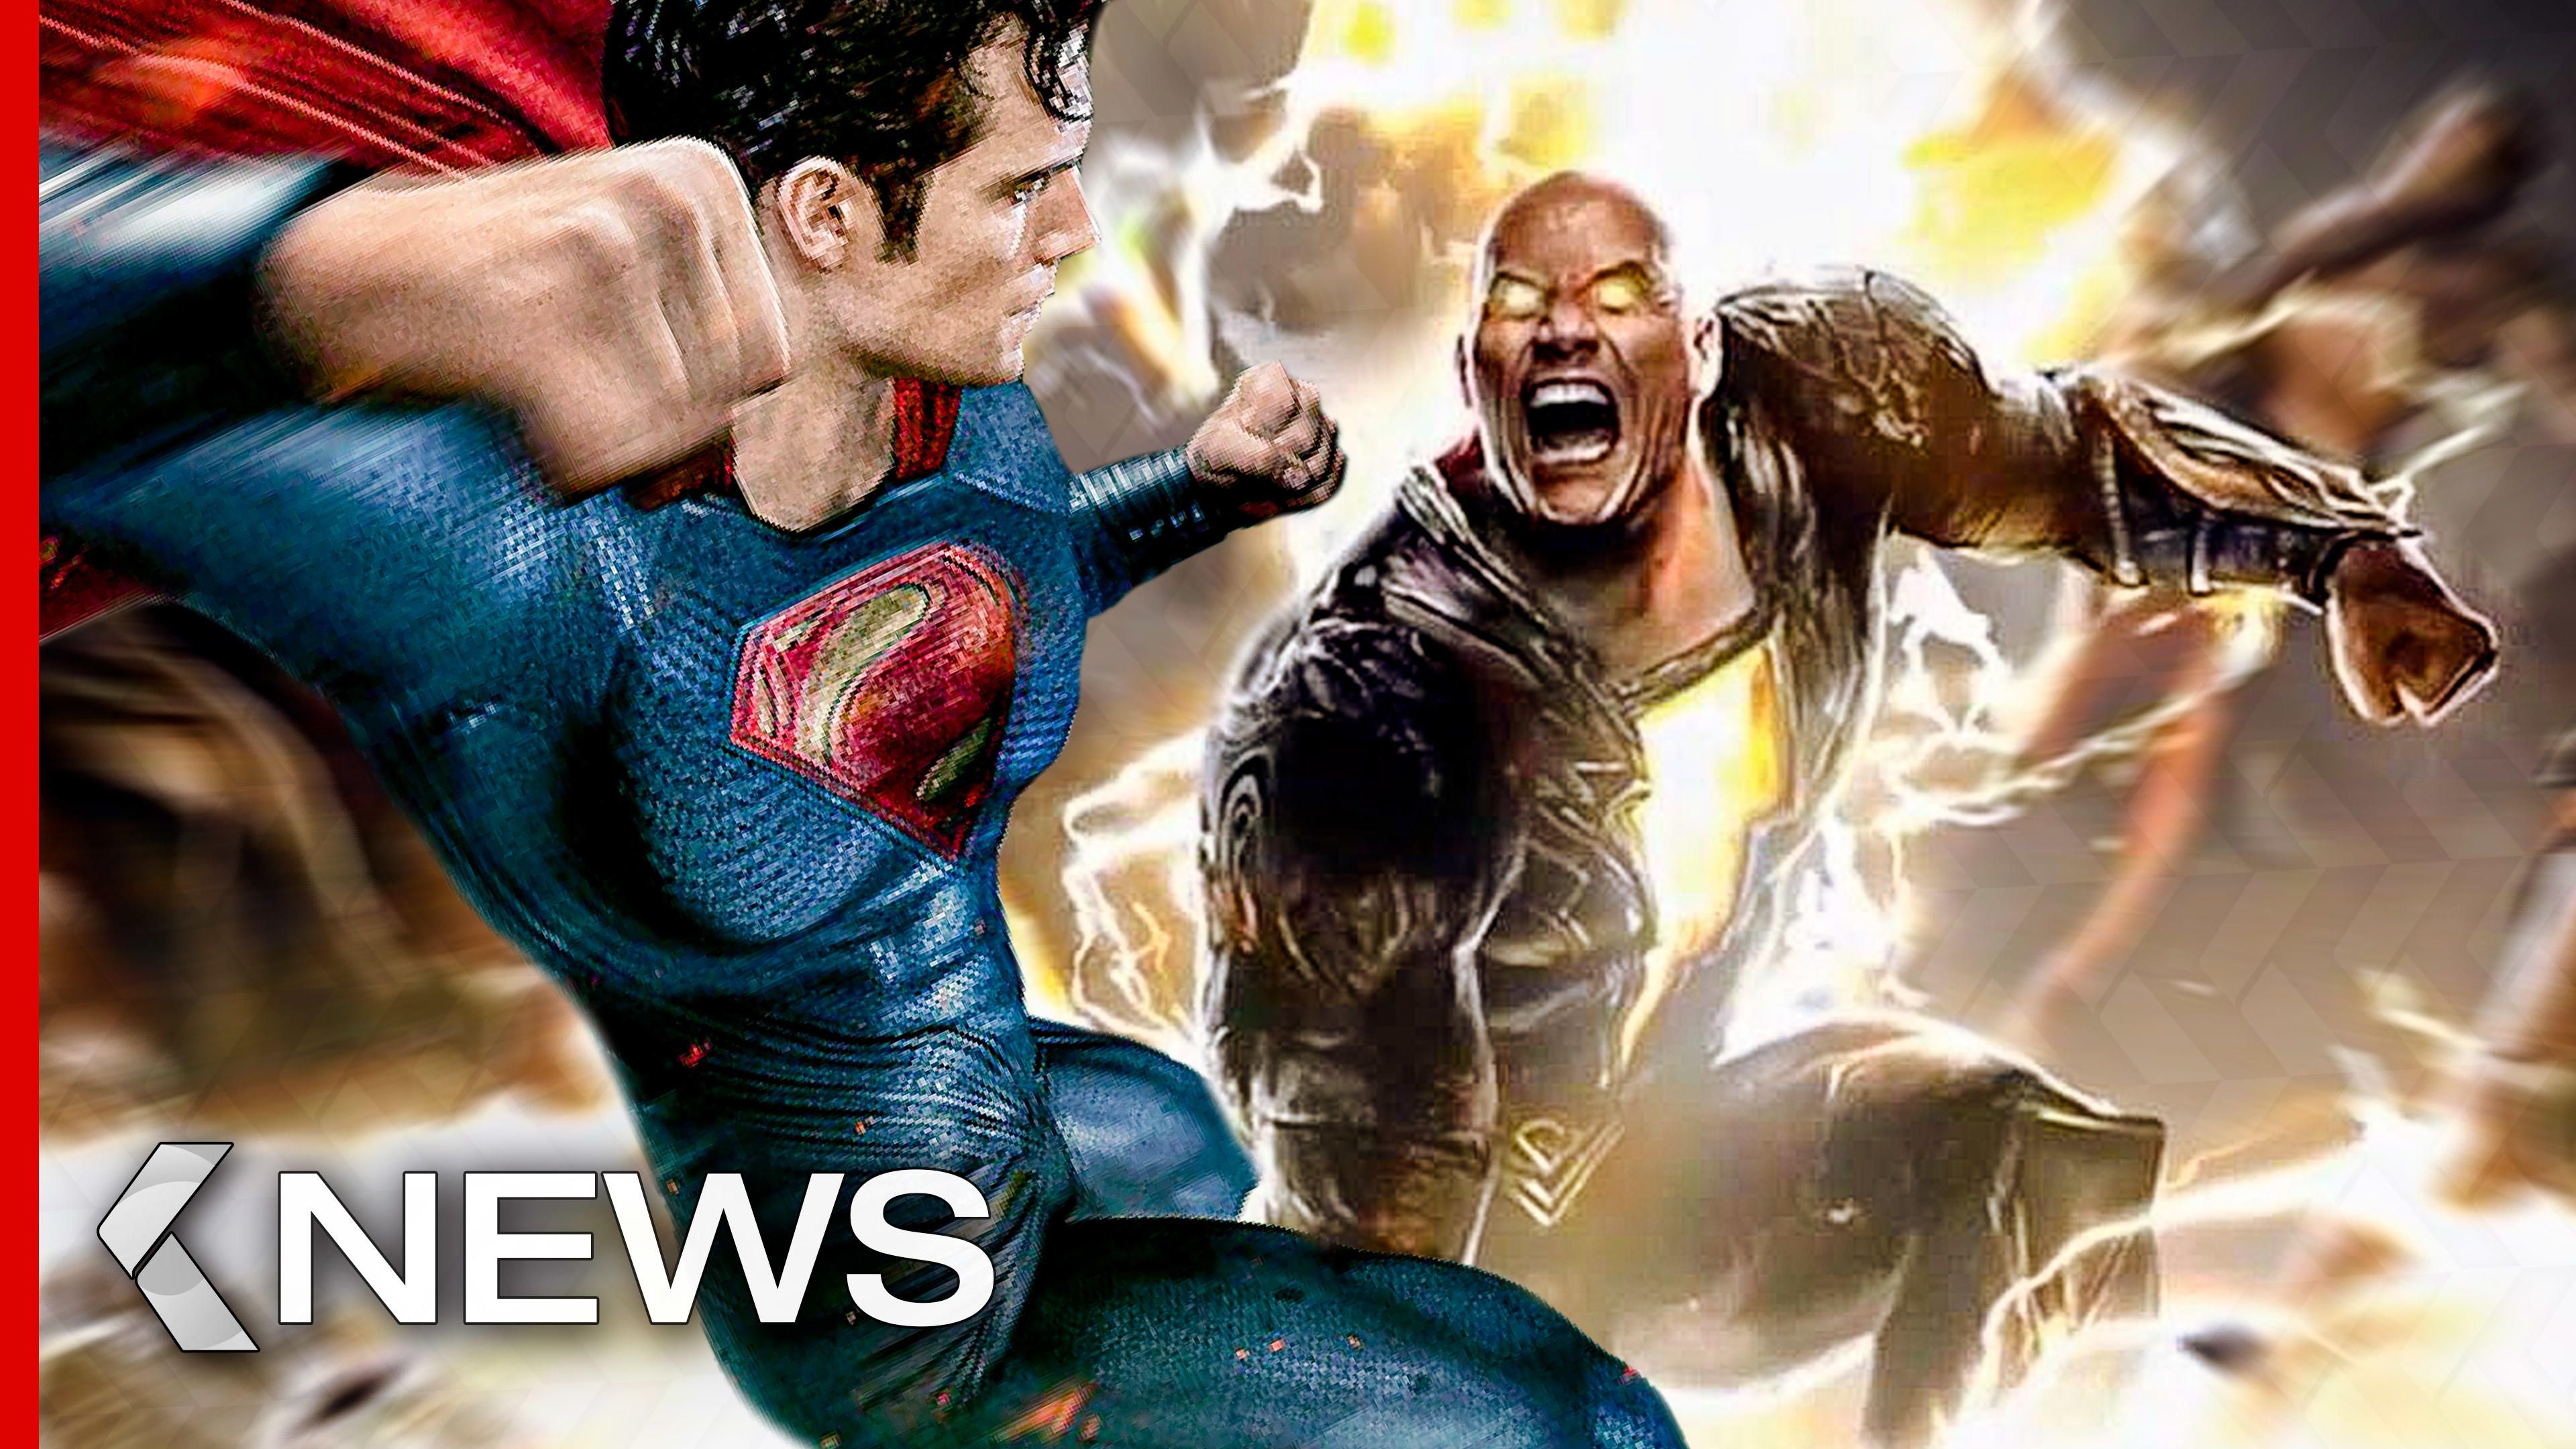 Dwayne Johnson 'Absolutely' Plans to Make Black Adam vs Superman Movie